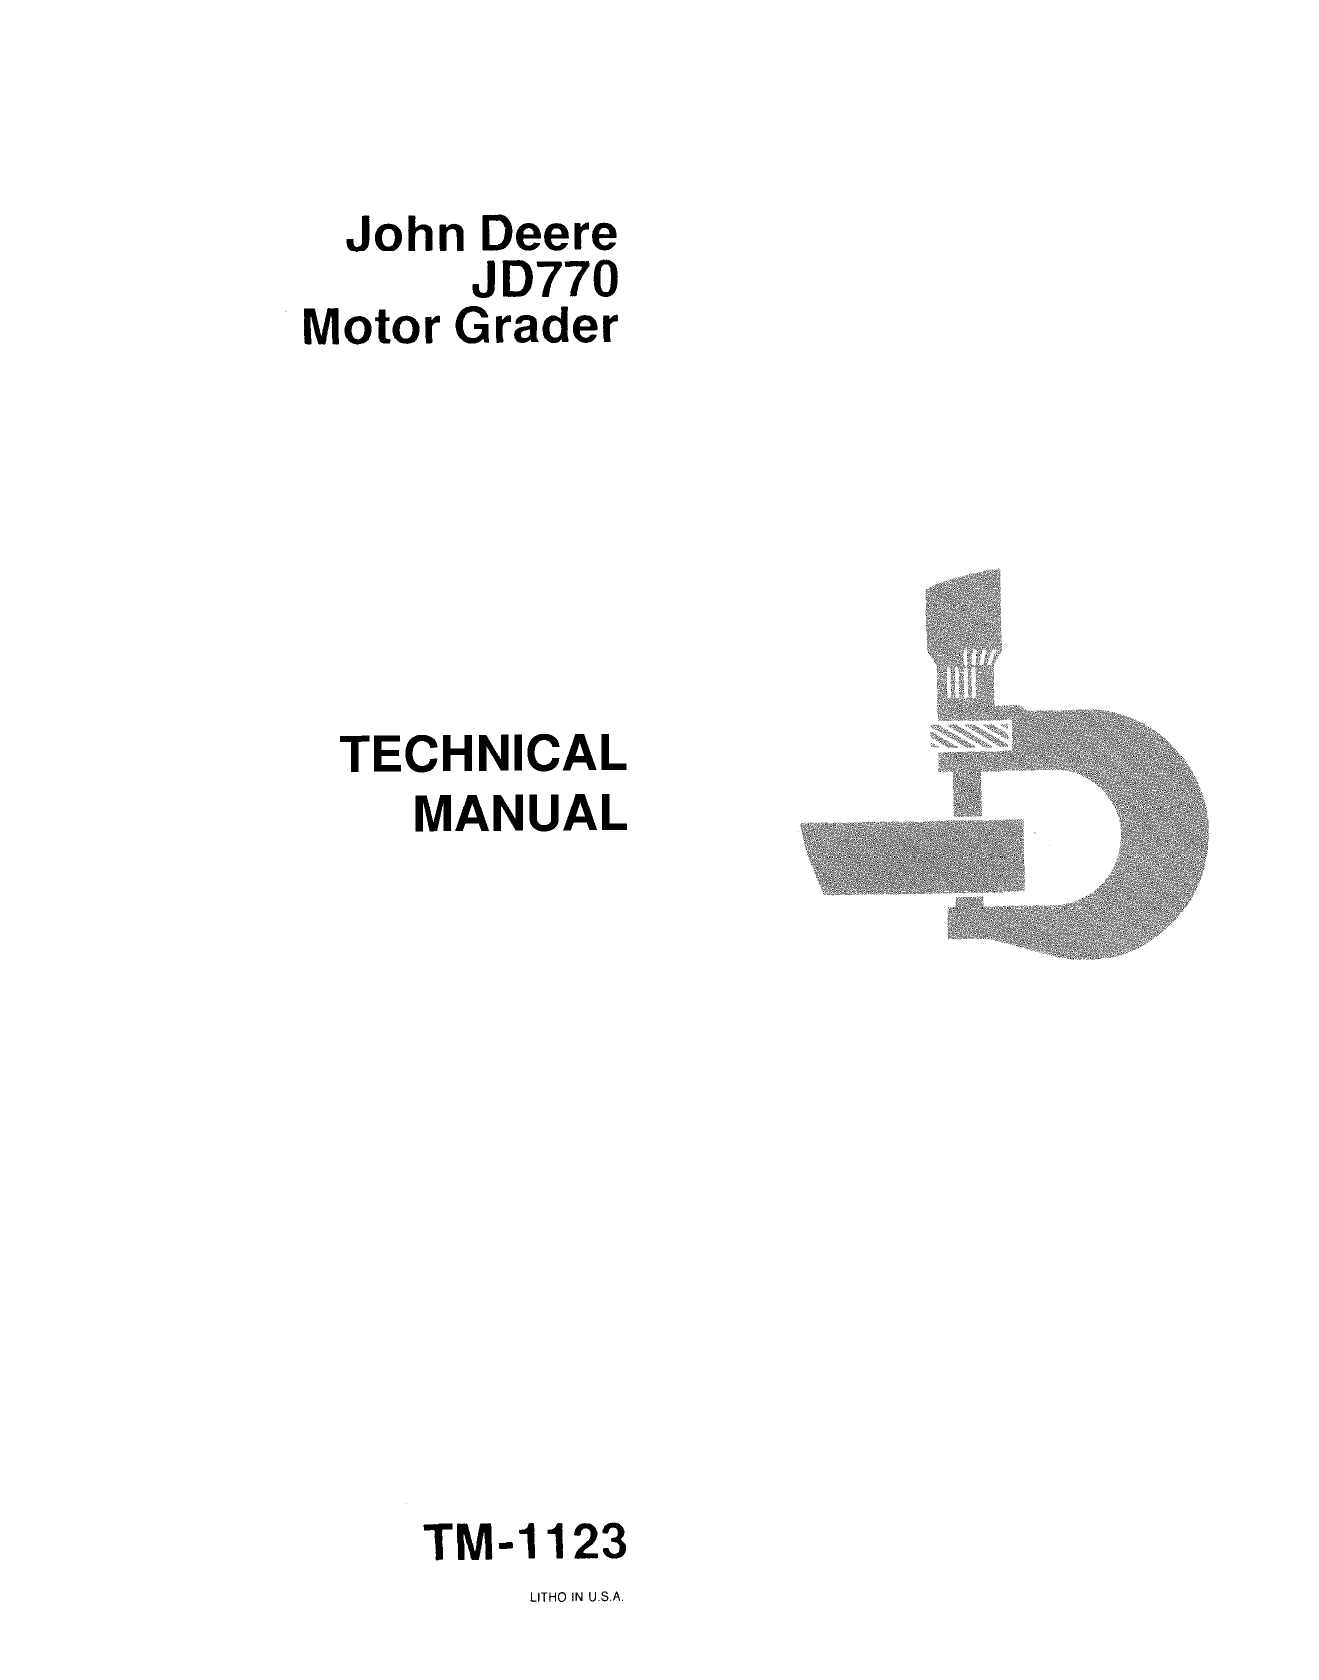 1989-1998 John Deere JD770 Motor Grader technical manual Preview image 6